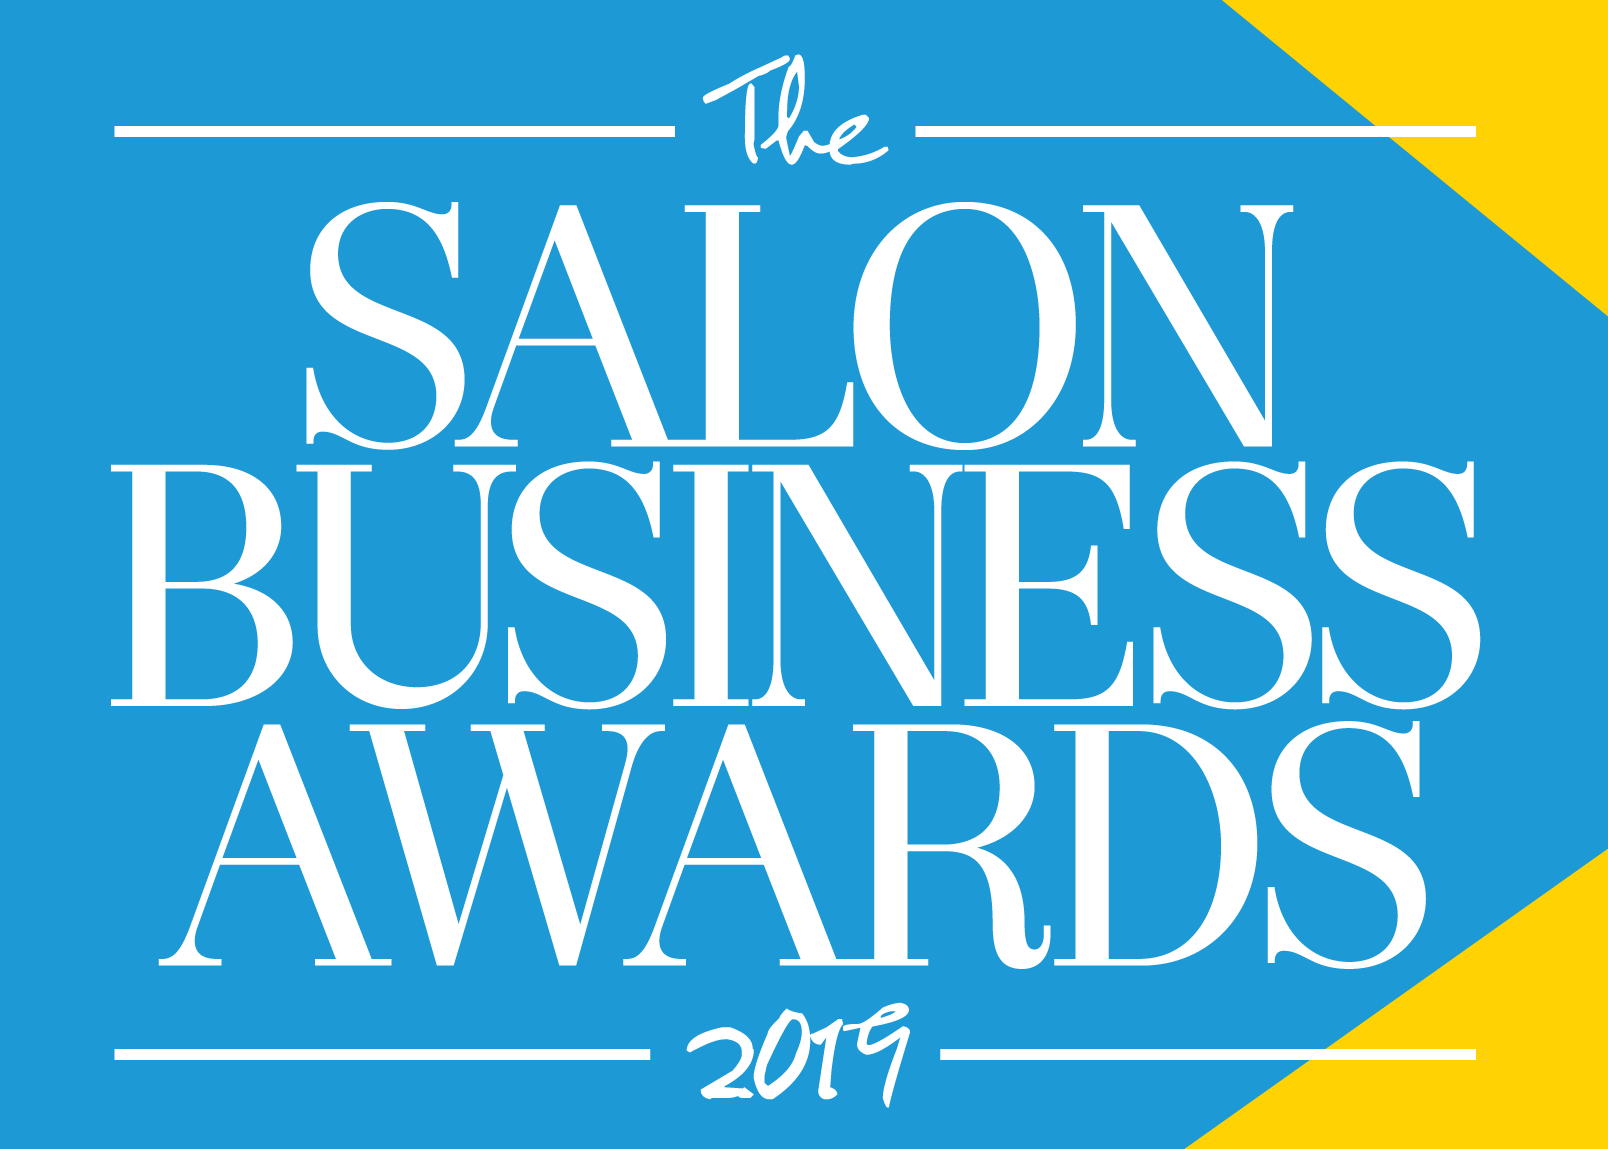 KAM – Salon Business Award Finalists 2019!